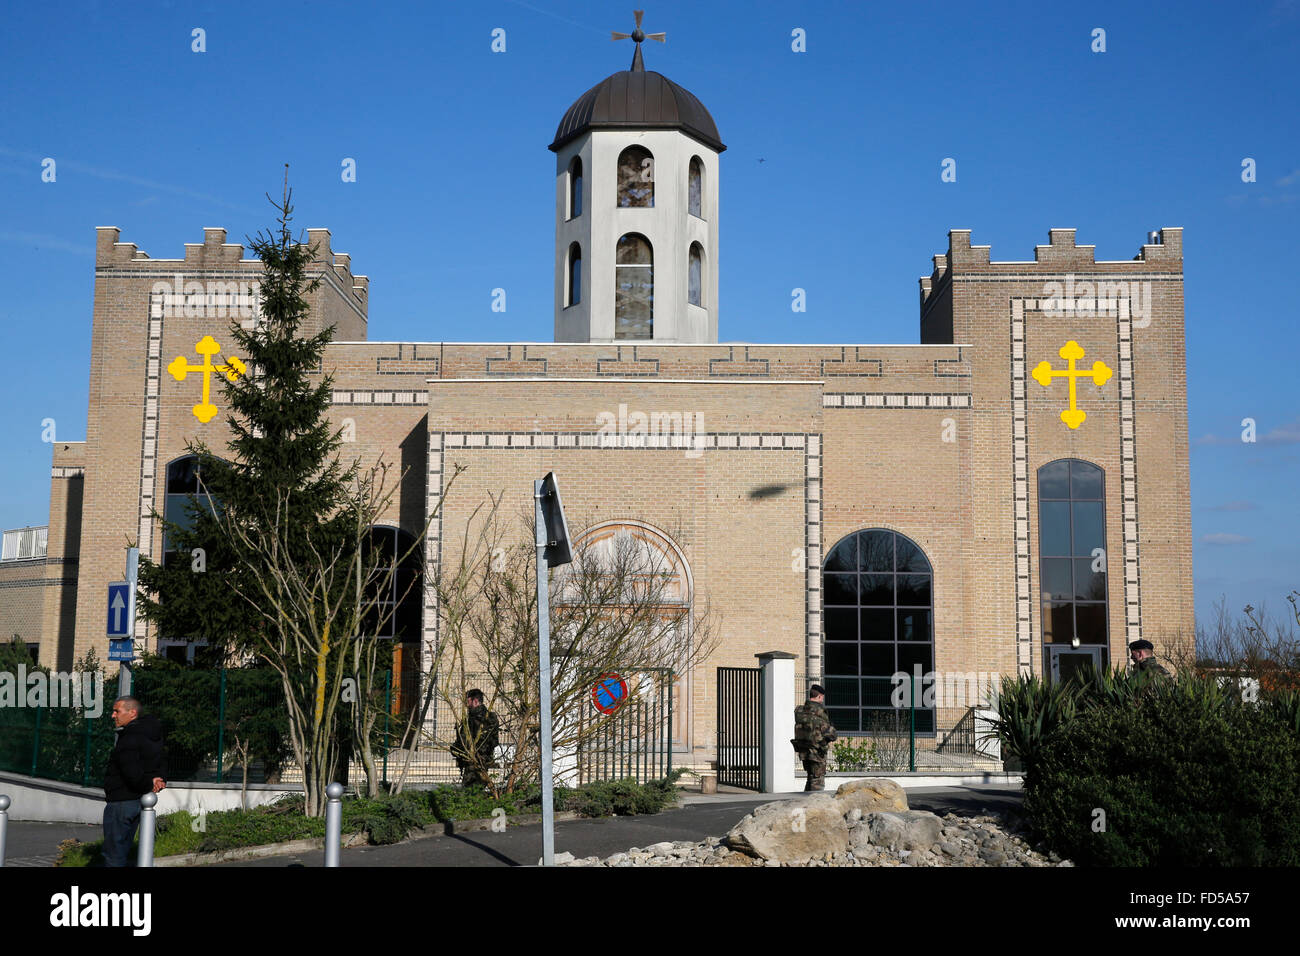 Saint Thomas's chaldean church, Sarcelles. Stock Photo